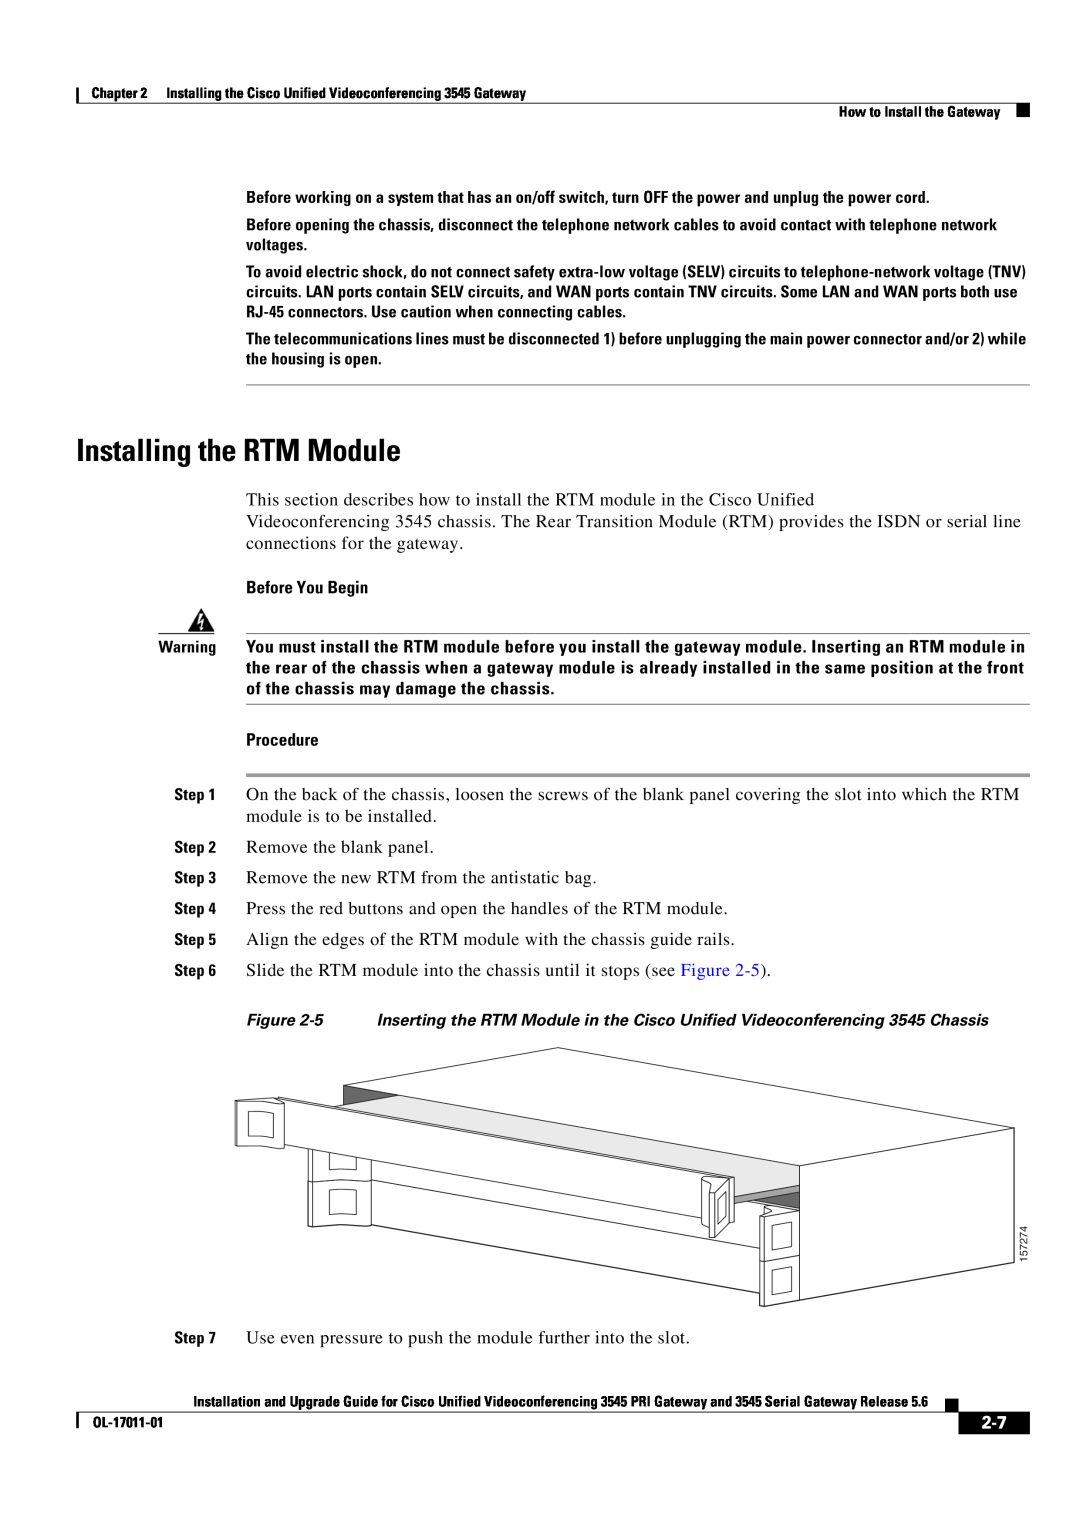 Cisco Systems 3545 Serial, 3545 PRI manual Installing the RTM Module, Before You Begin, Procedure 